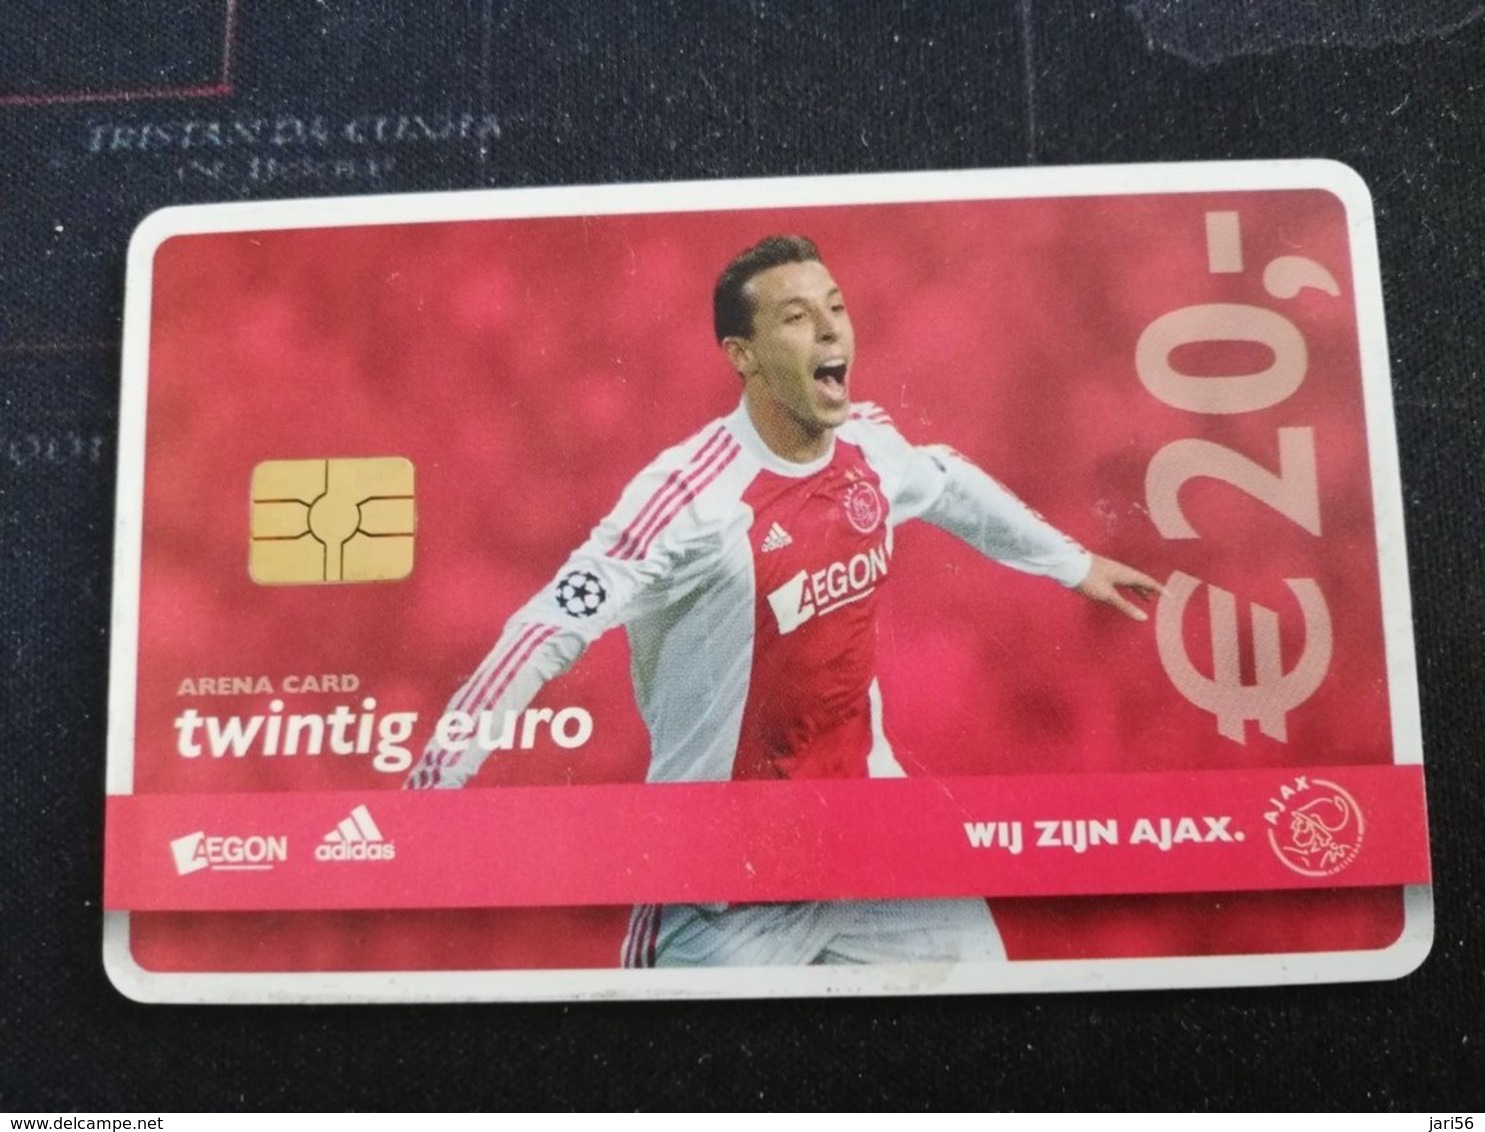 NETHERLANDS  ARENA CARD FOOTBAL/SOCCER  AJAX AMSTERDAM ABDELAOUI  €20, USED CARD  ** 1420 ** - öffentlich